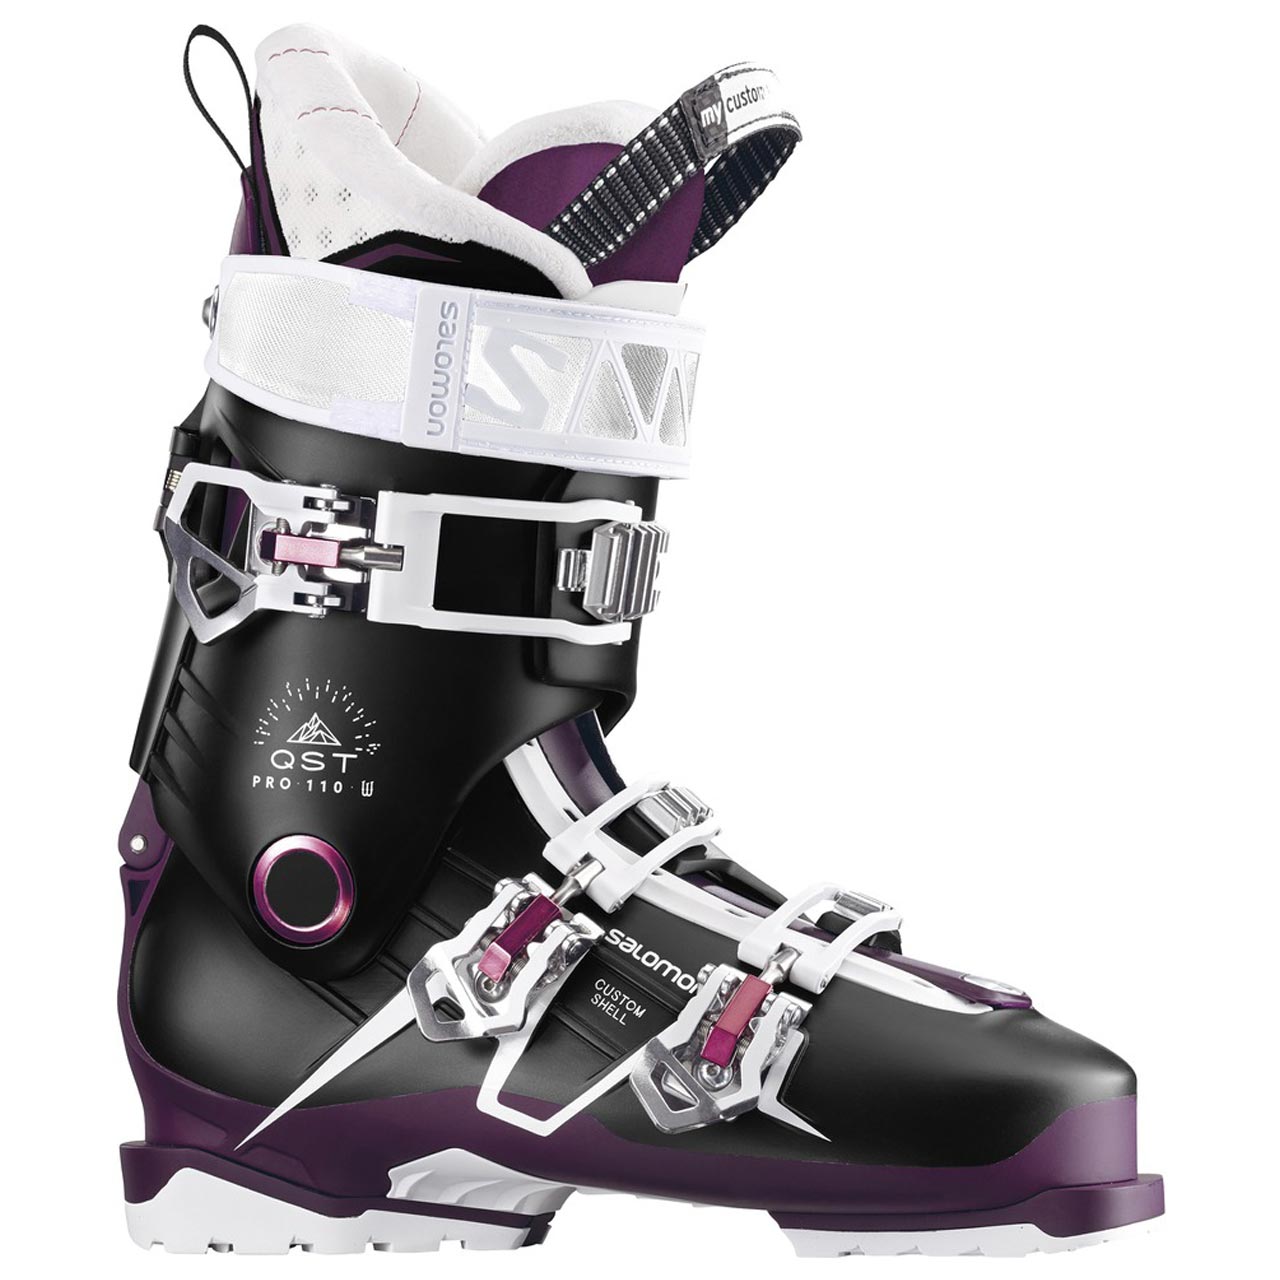 Video Gear Review: Salomon QST Pro 110 Ski Boot - Next Adventure